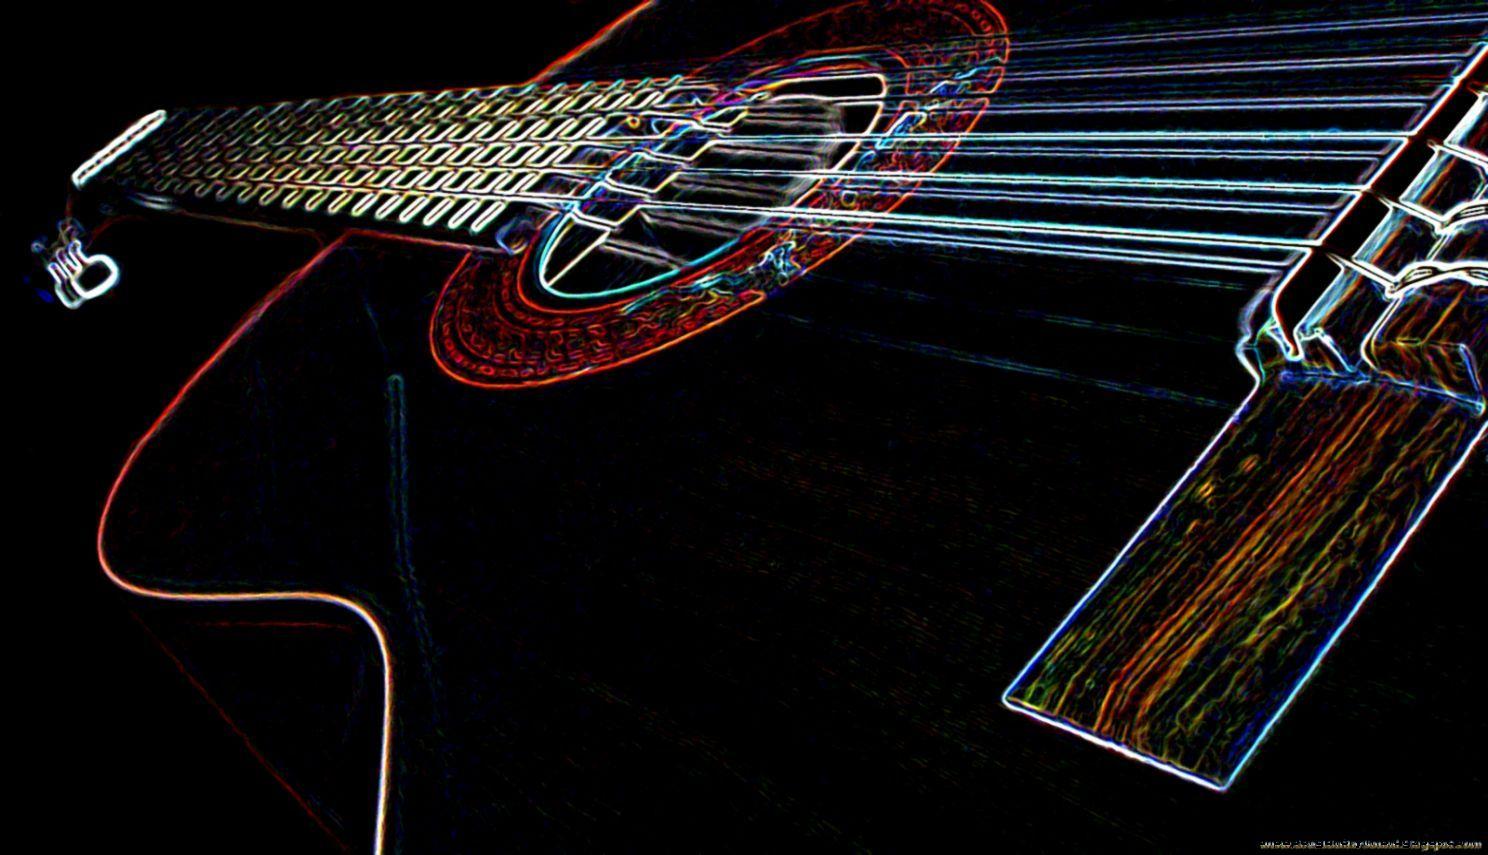 Landola C 55 Classical Guitar Glowing Music HD Wallpaper. Wallpaper